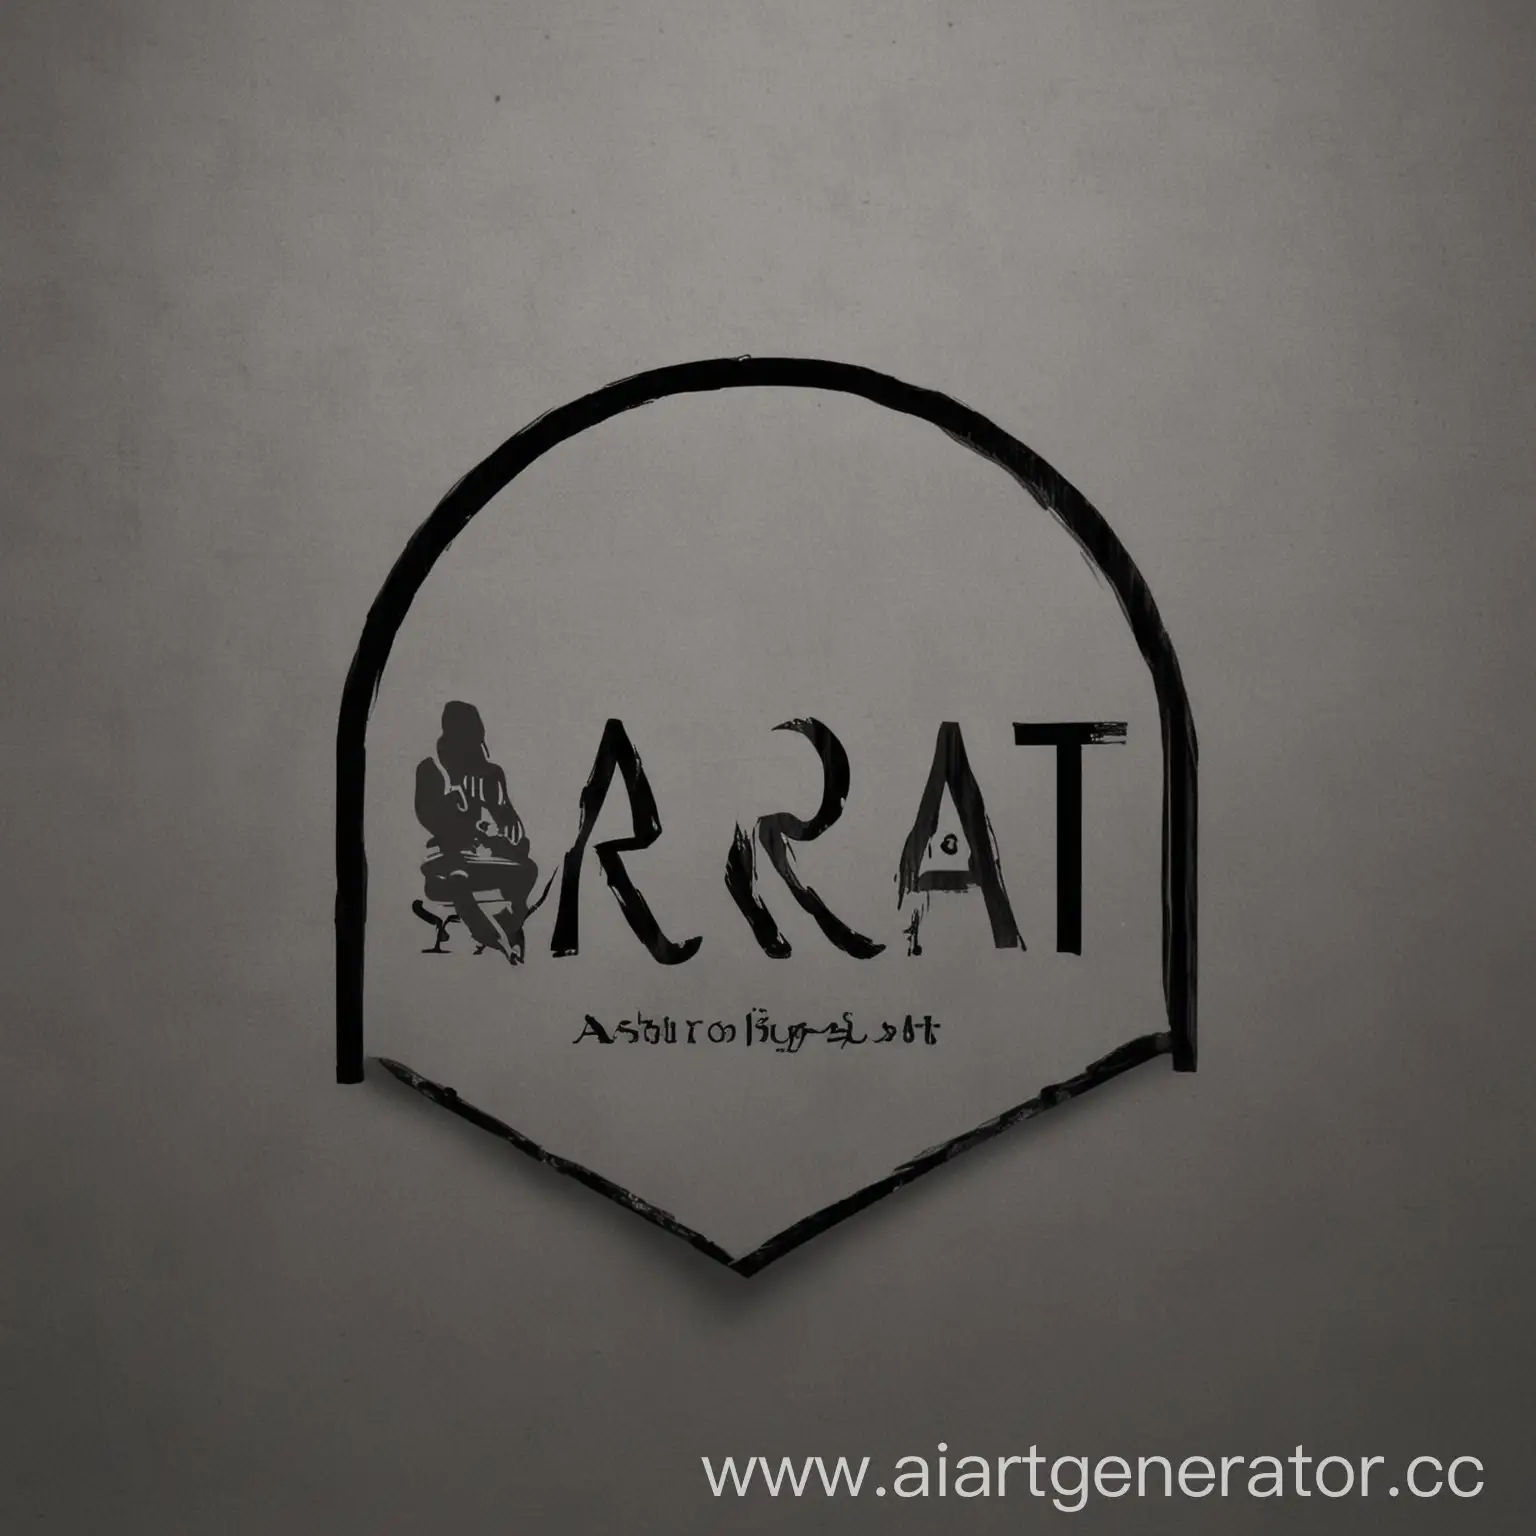 Minimalistic-Black-Arbat-Logo-with-Bench-and-Arch